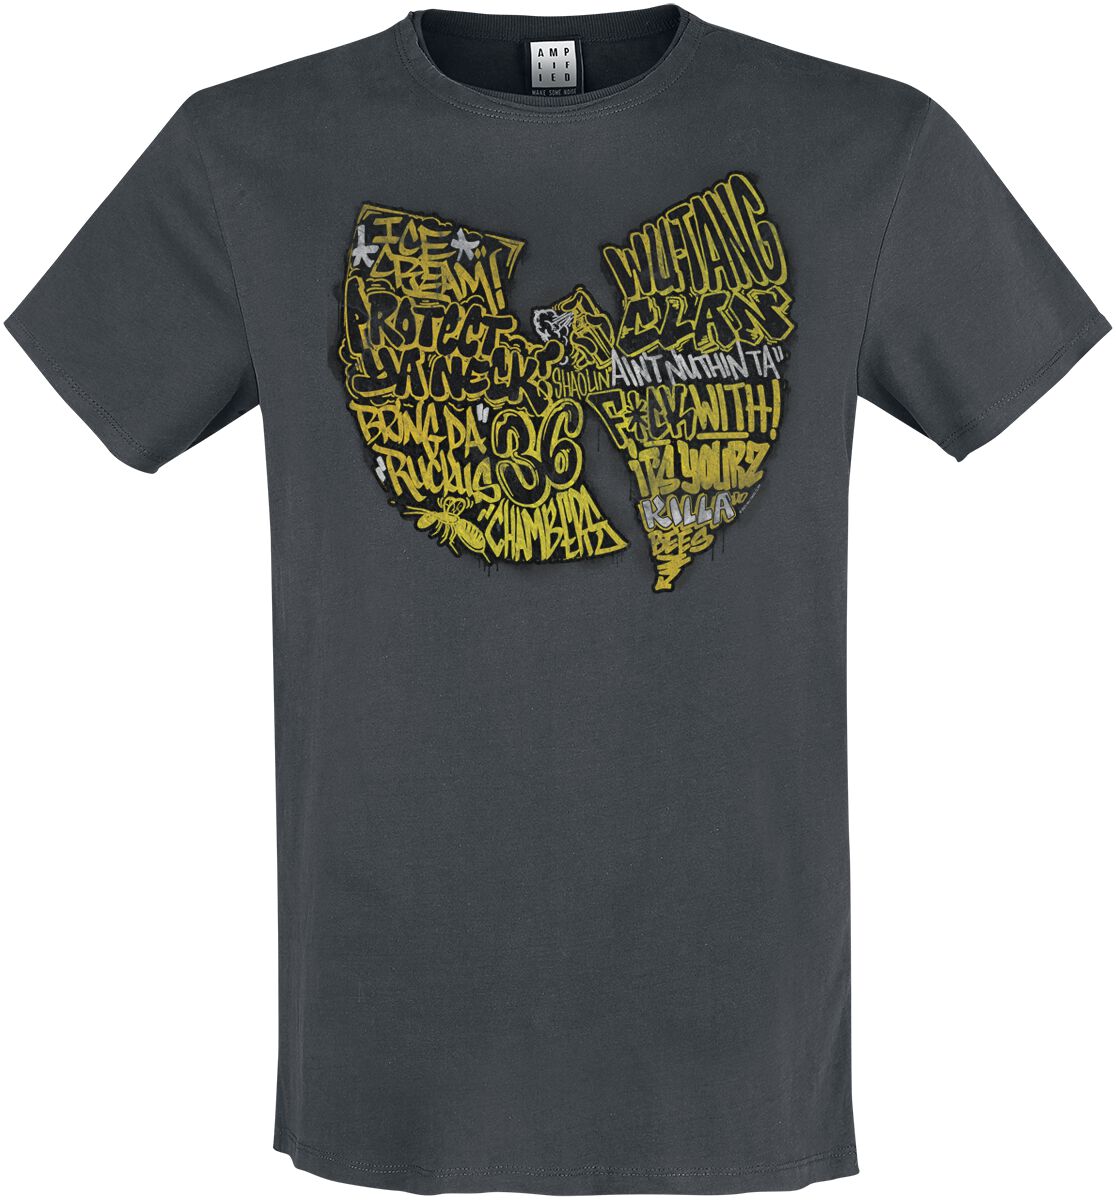 Wu-Tang Clan Amplified Collection - Graffiti Logo T-Shirt charcoal in M